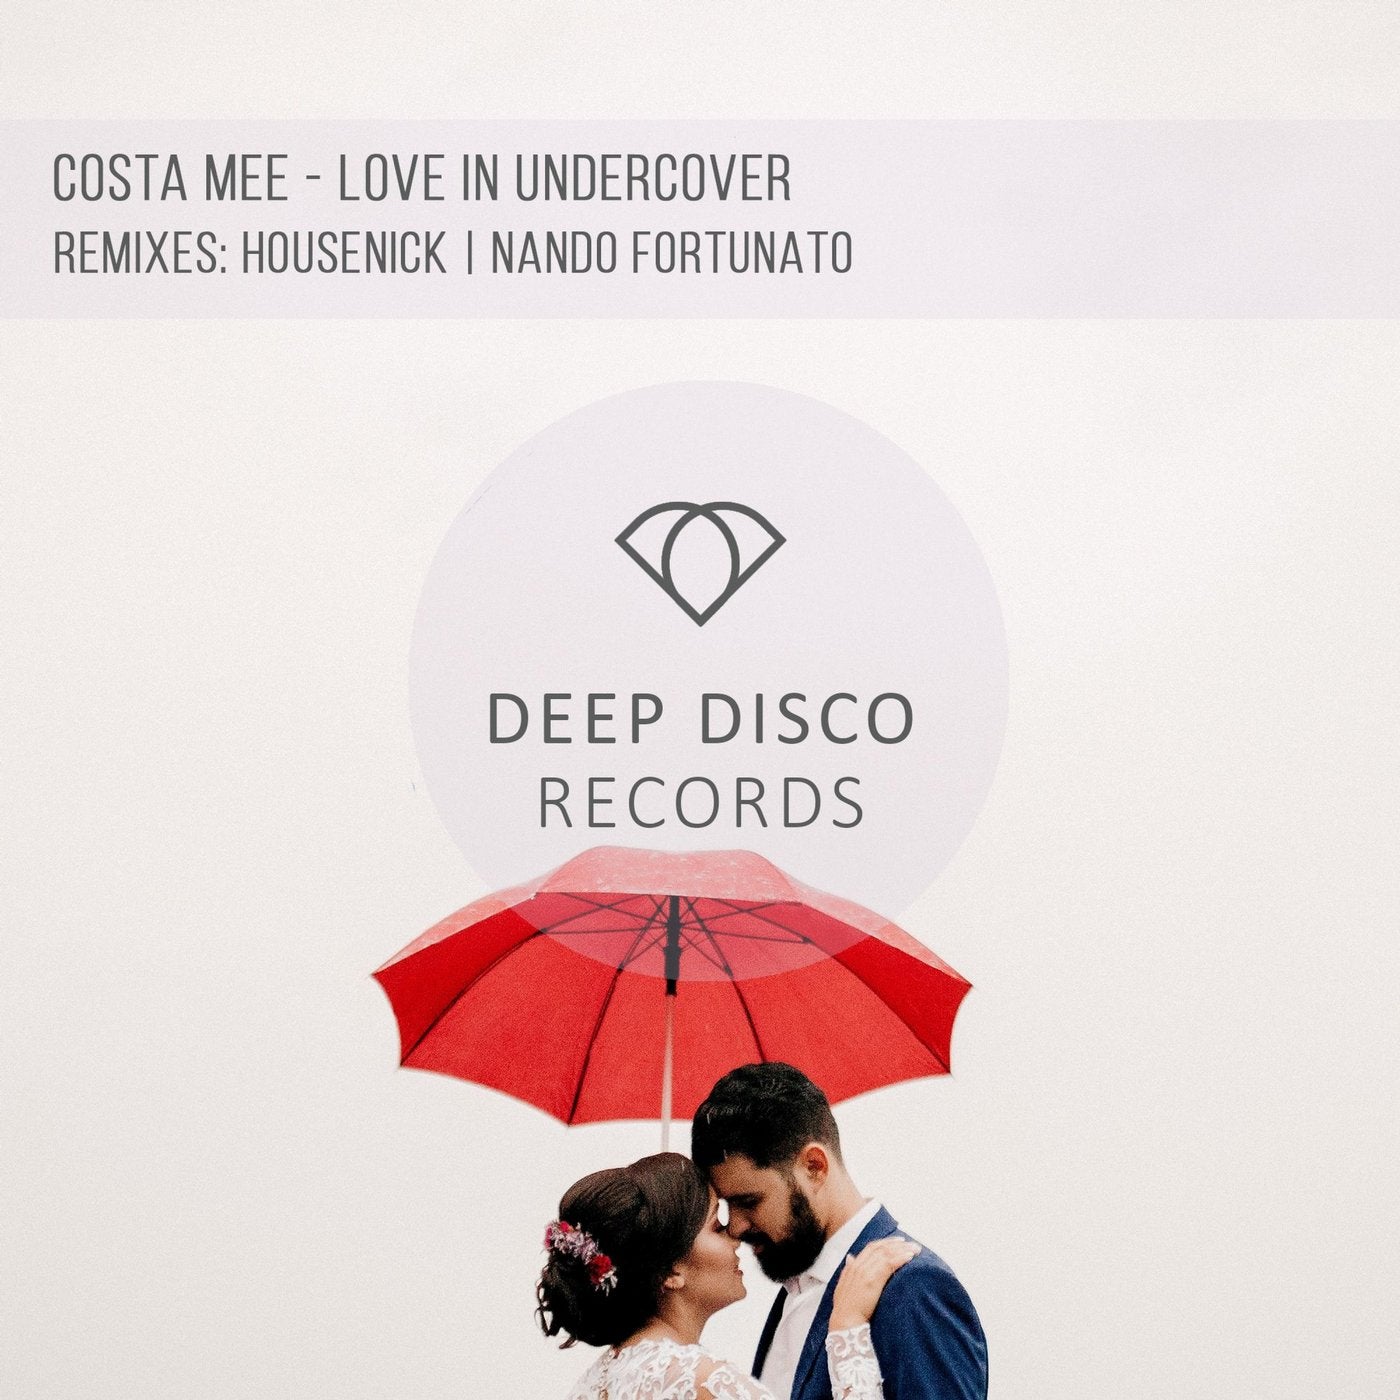 Costa mee love. Costa mee - Love in Undercover (Original Mix). Love Costa оригинал. Nando fortunato & Costa mee картинка. Housenick фото.